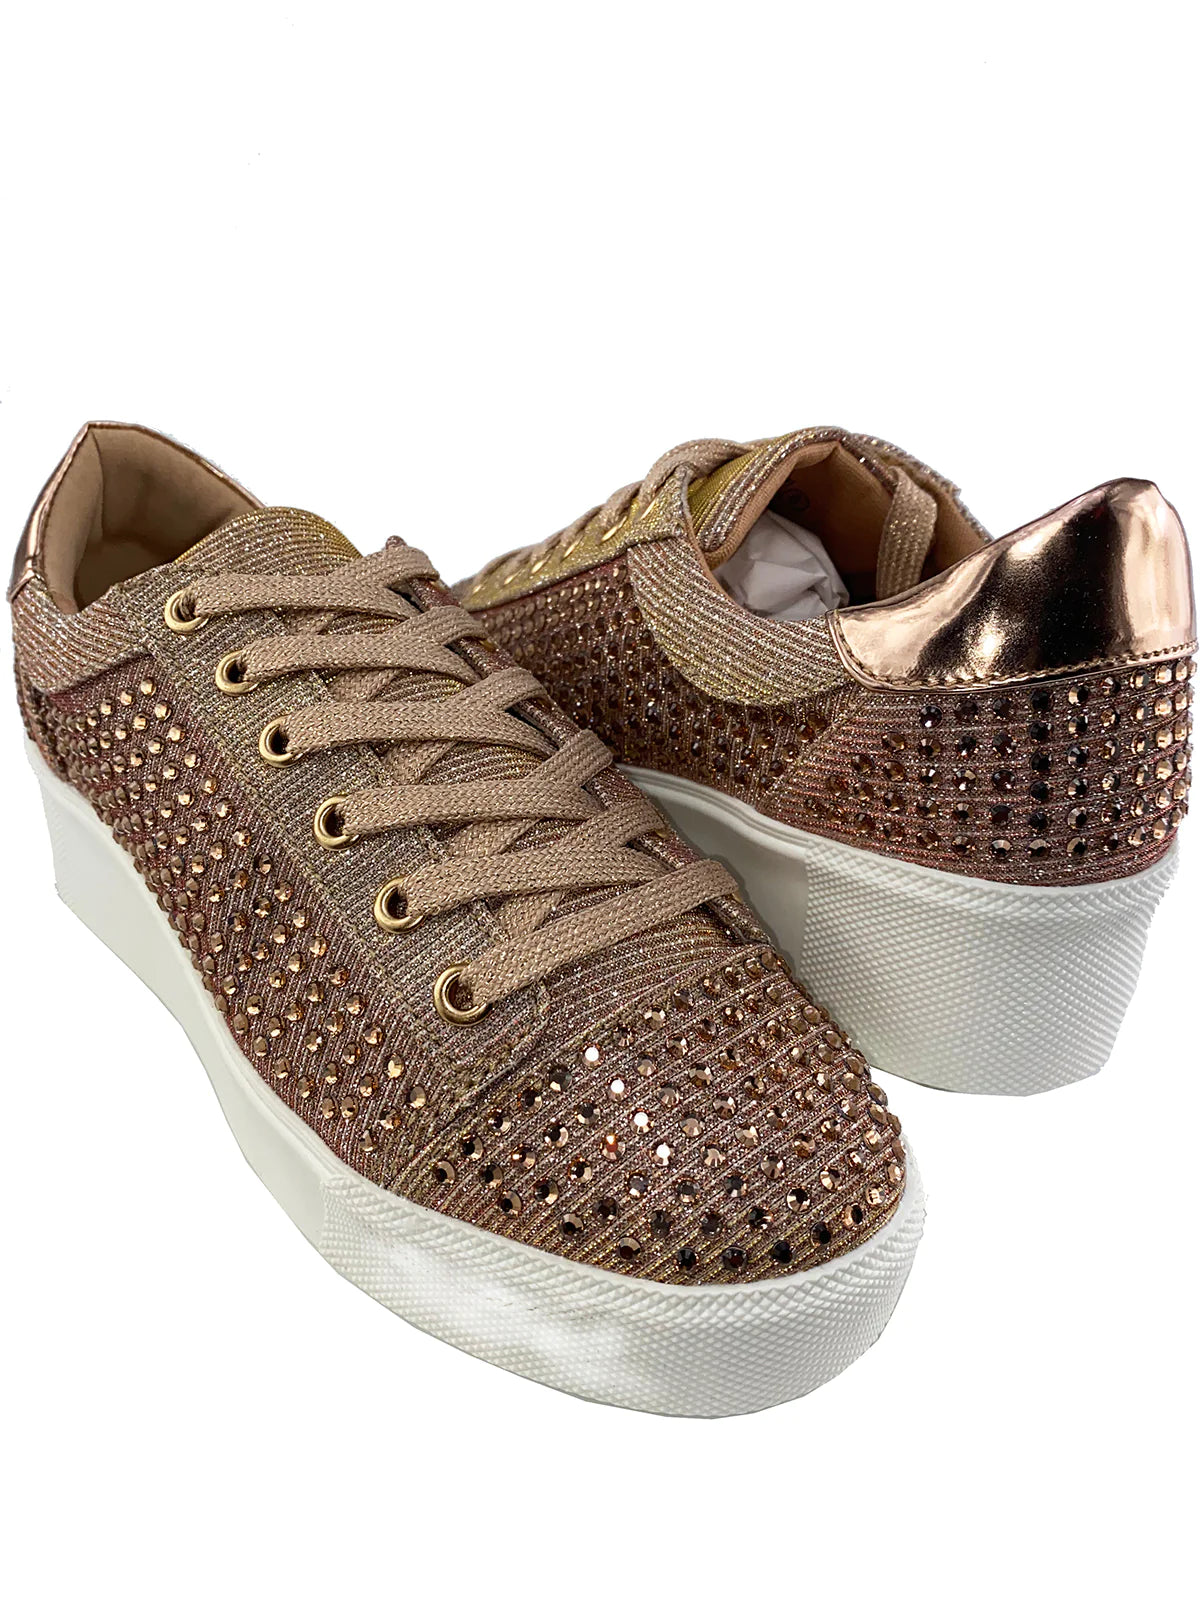 Diva Sparkly Sneakers in Rose Gold - ooh la la!